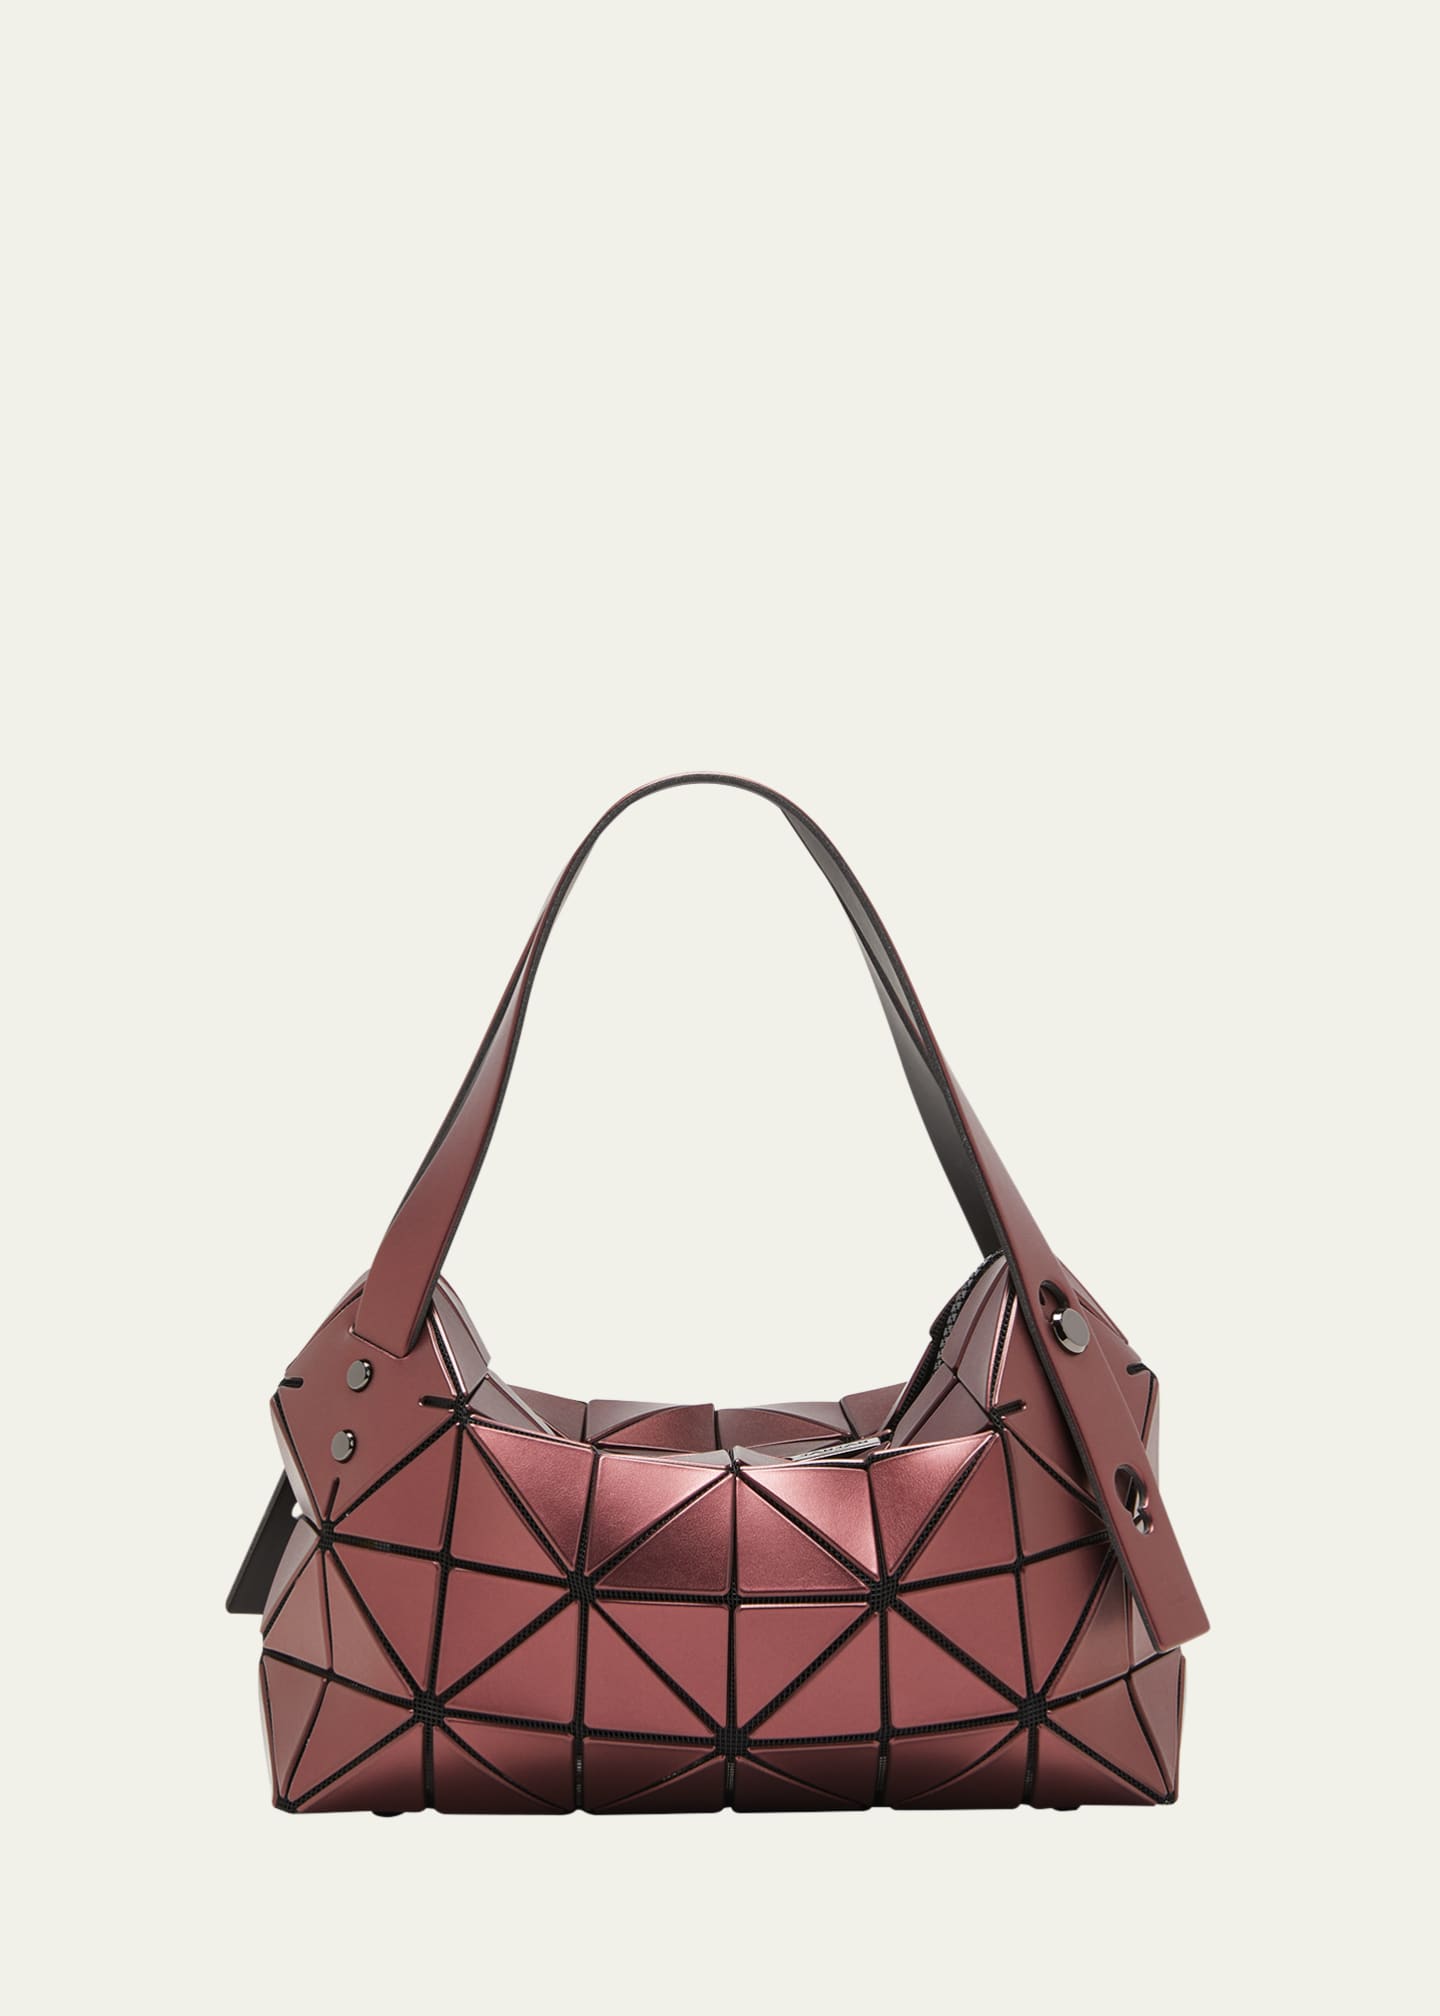 Bao Bao Issey Miyake Handbags, Purses & Wallets for Women